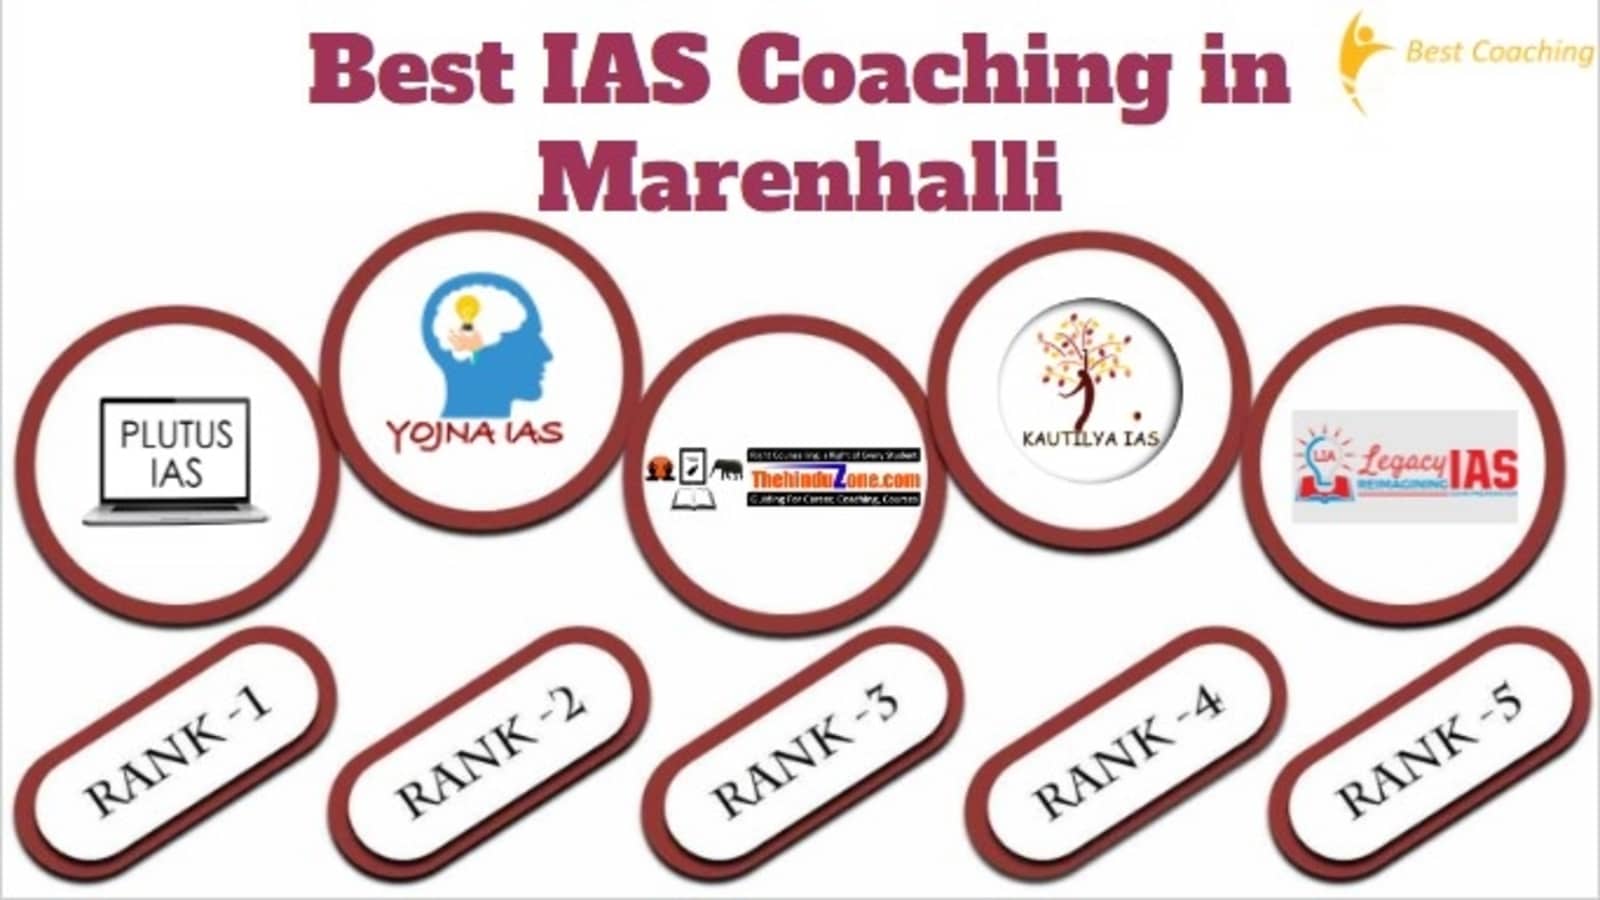 Best IAS Coaching in Marenhalli